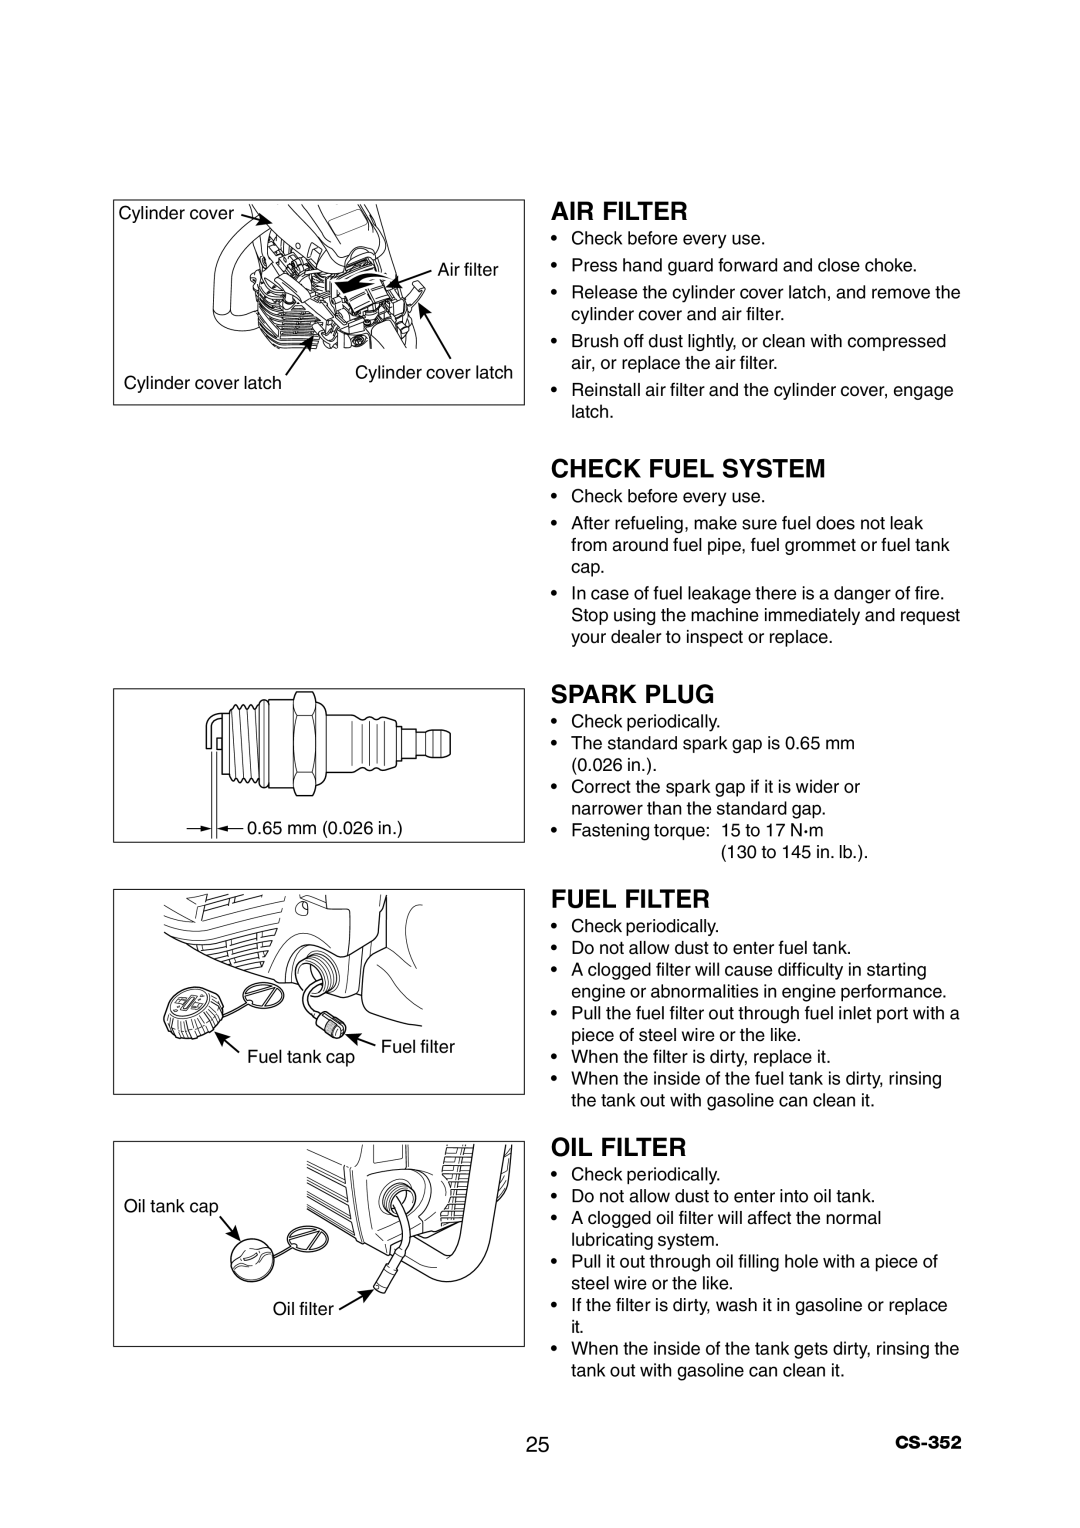 Echo CS-352 instruction manual Air Filter, Check Fuel System, Spark Plug, Fuel Filter, Oil Filter 